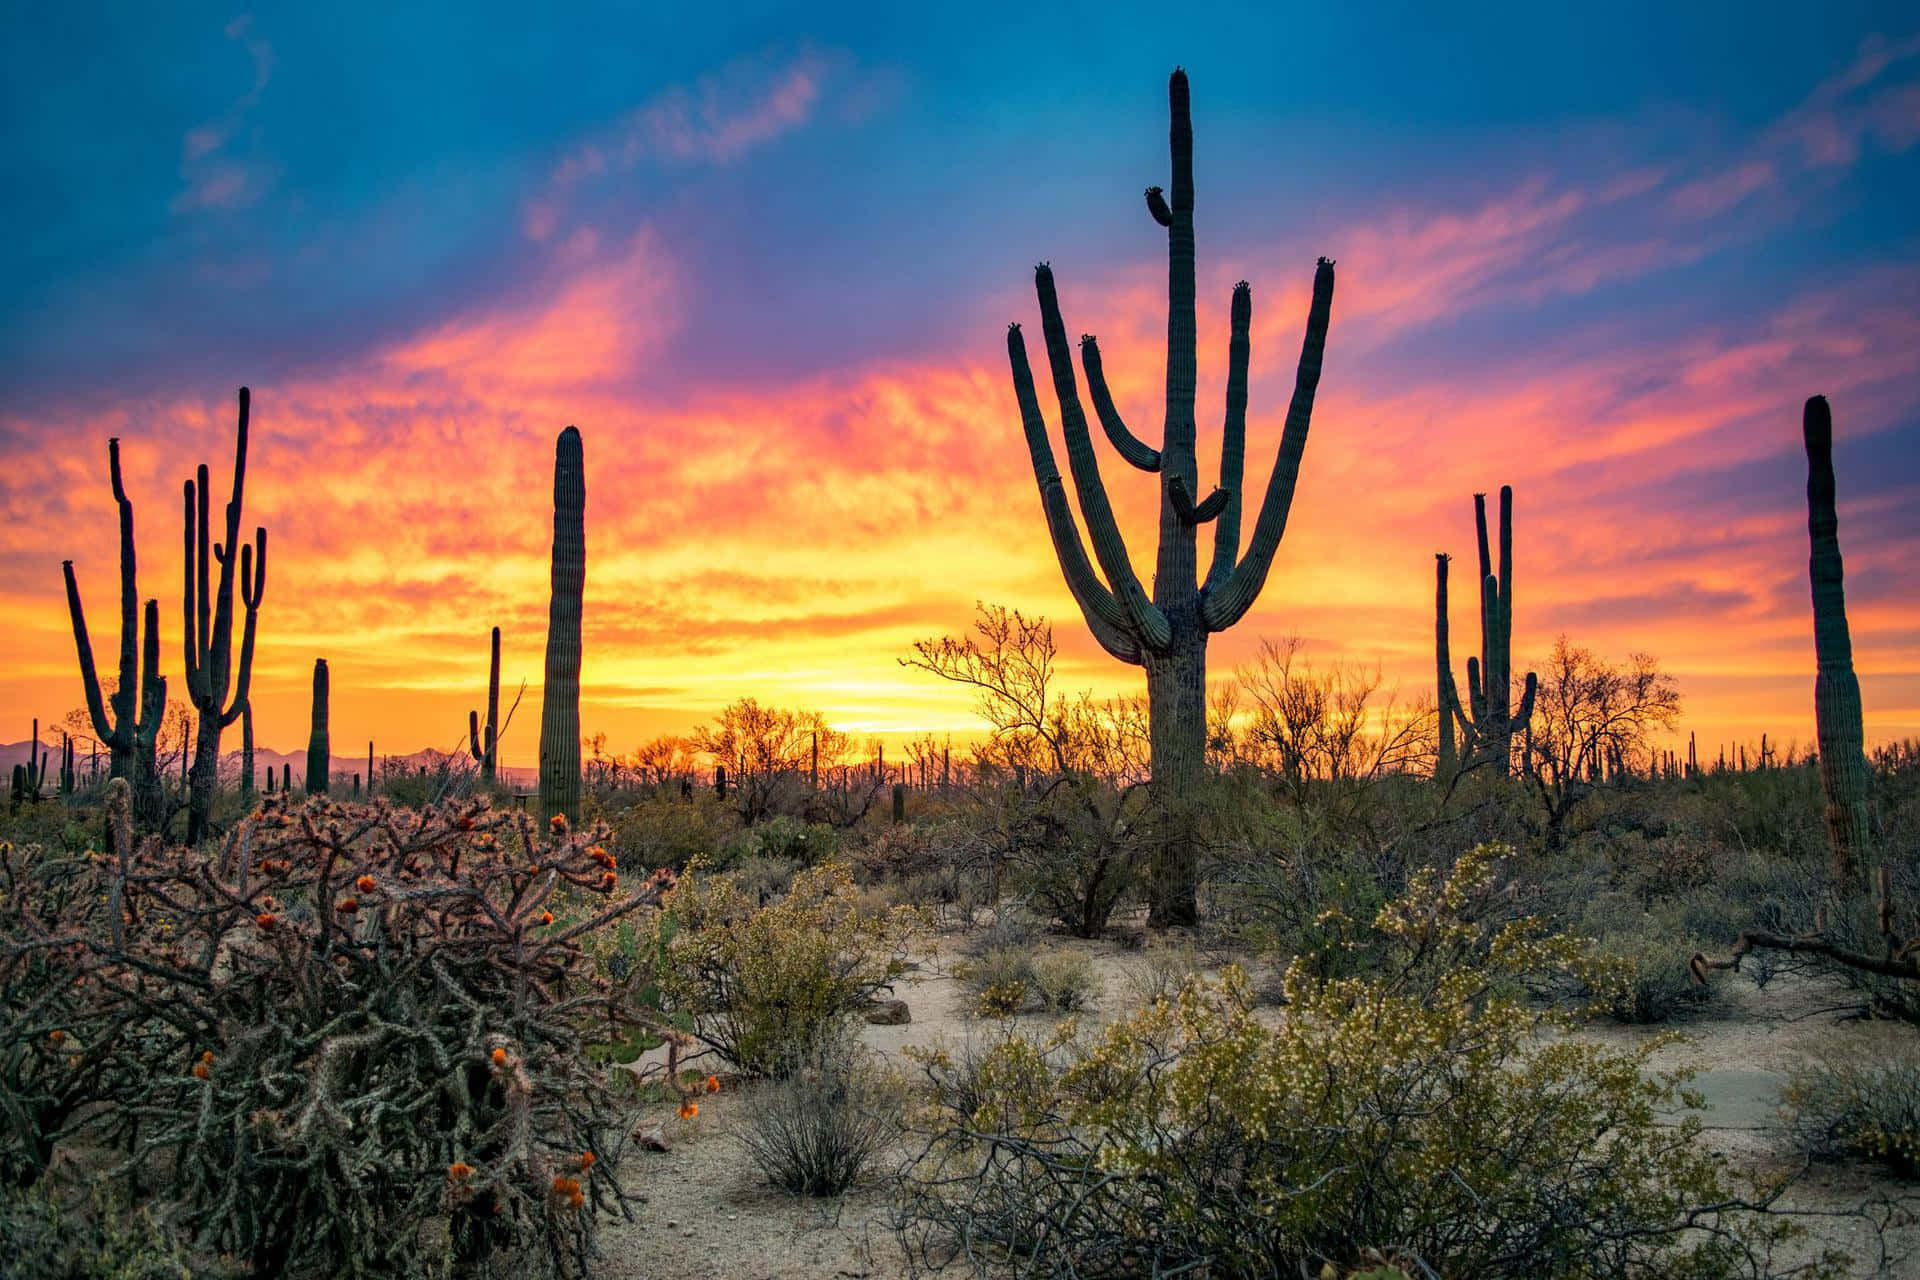 Discover the beautiful deserts of Arizona